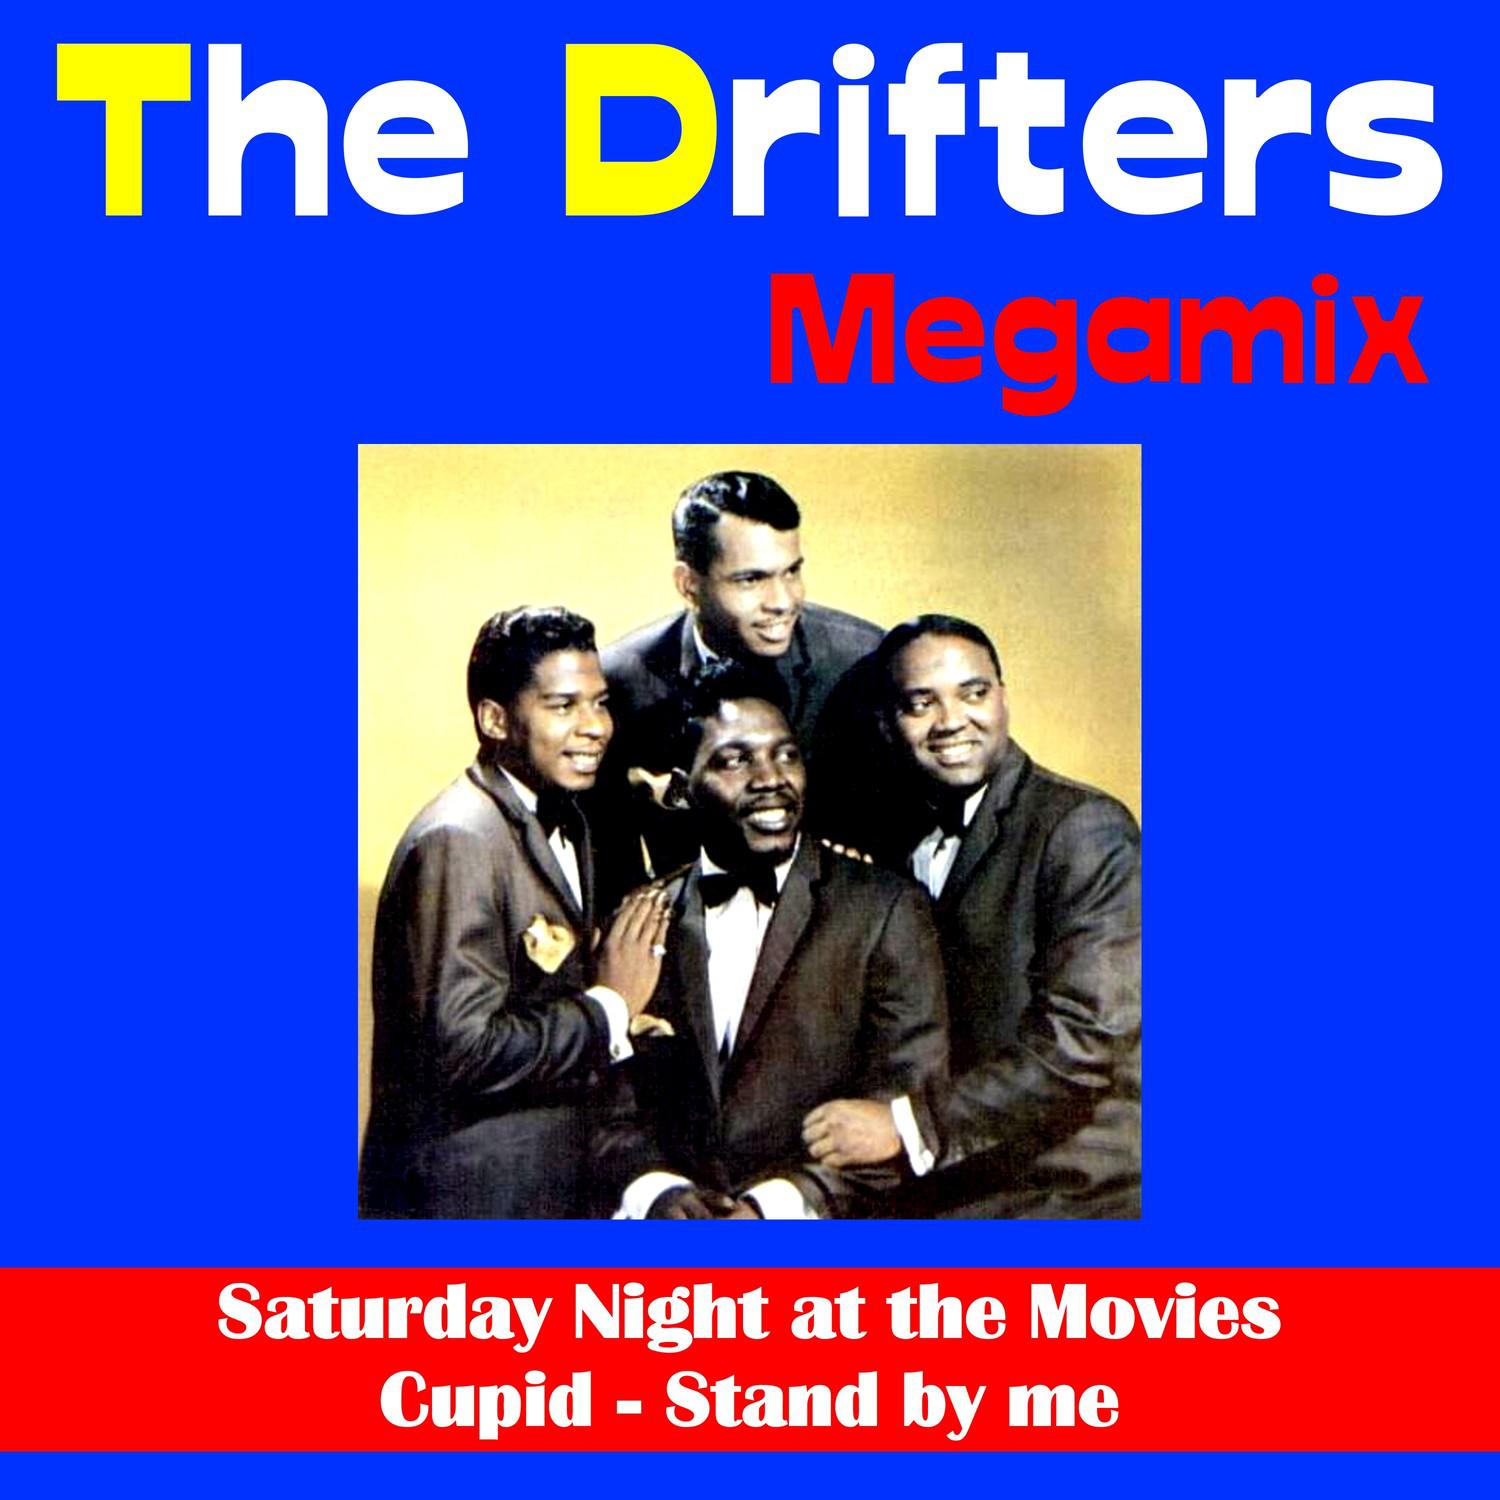 The Drifters (Megamix)